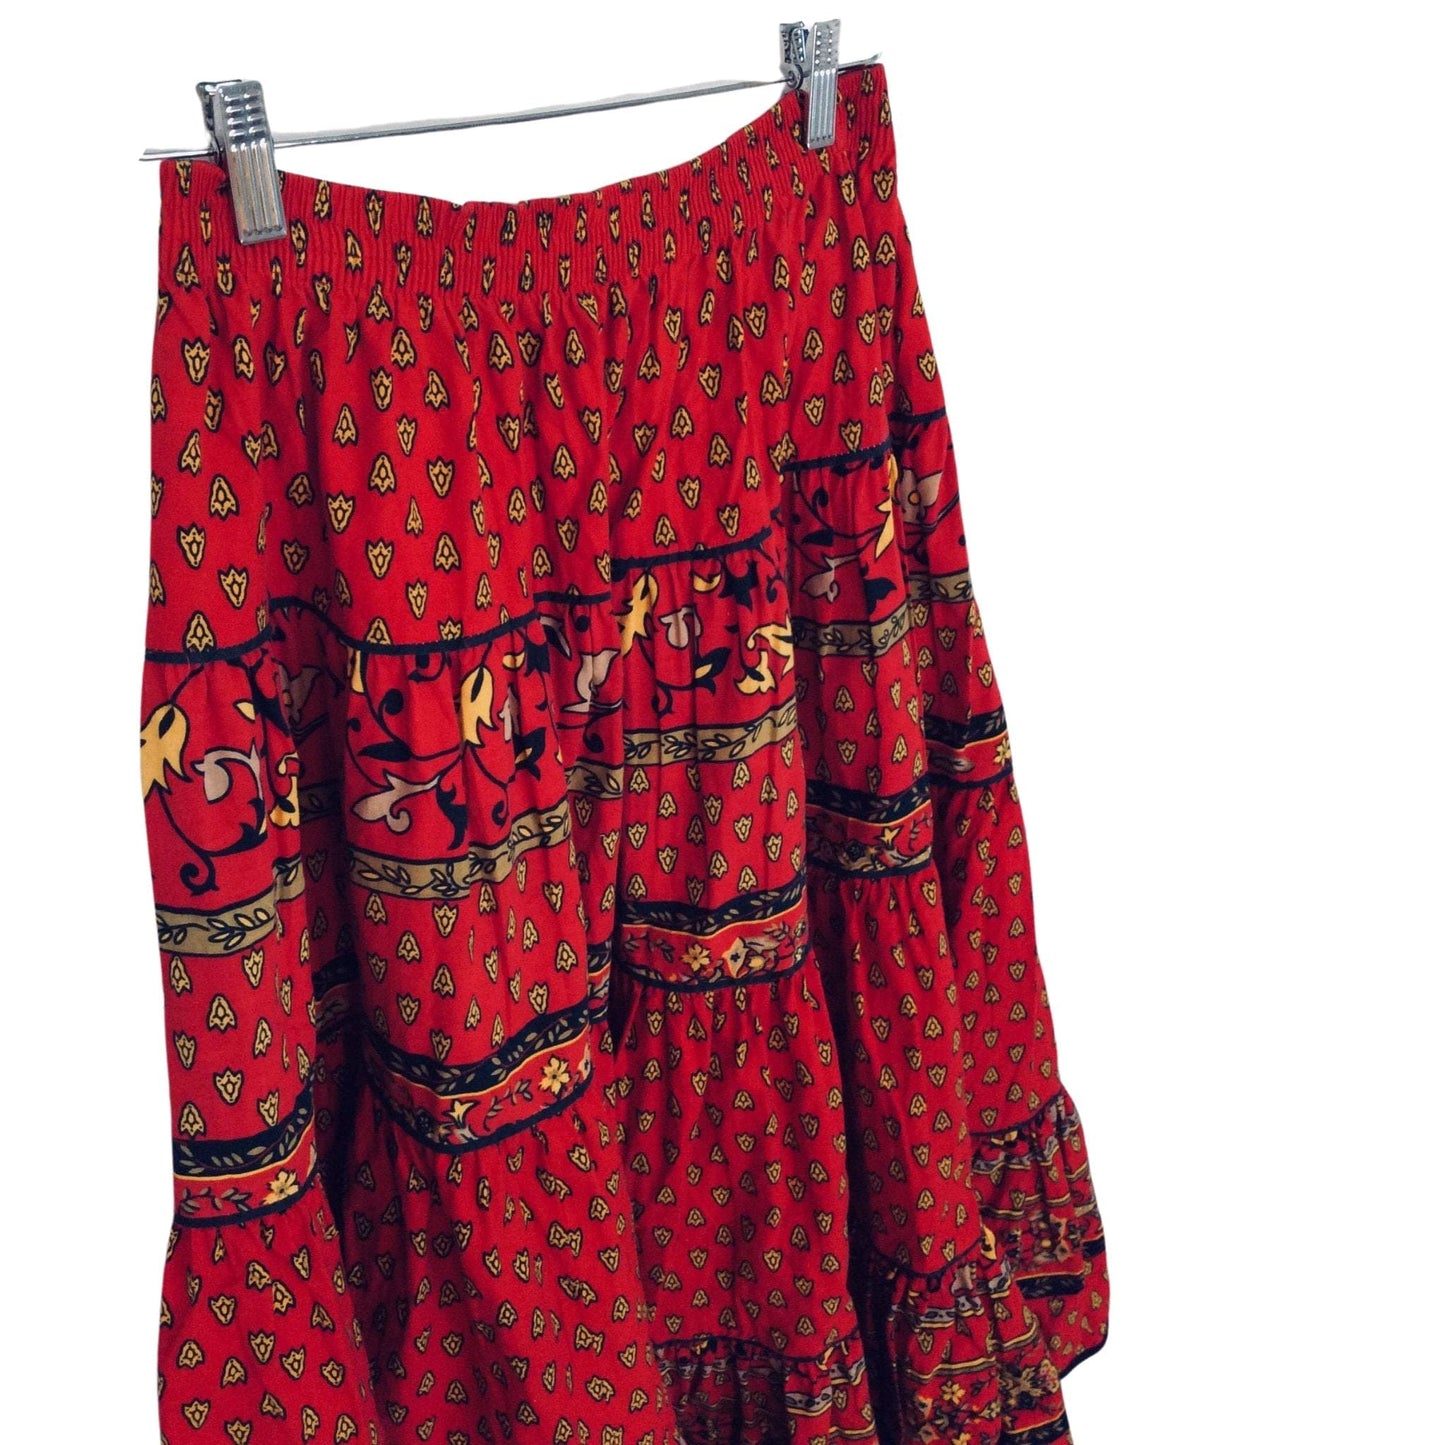 Red Western Full Skirt Large / Multi / Vintage 1980s